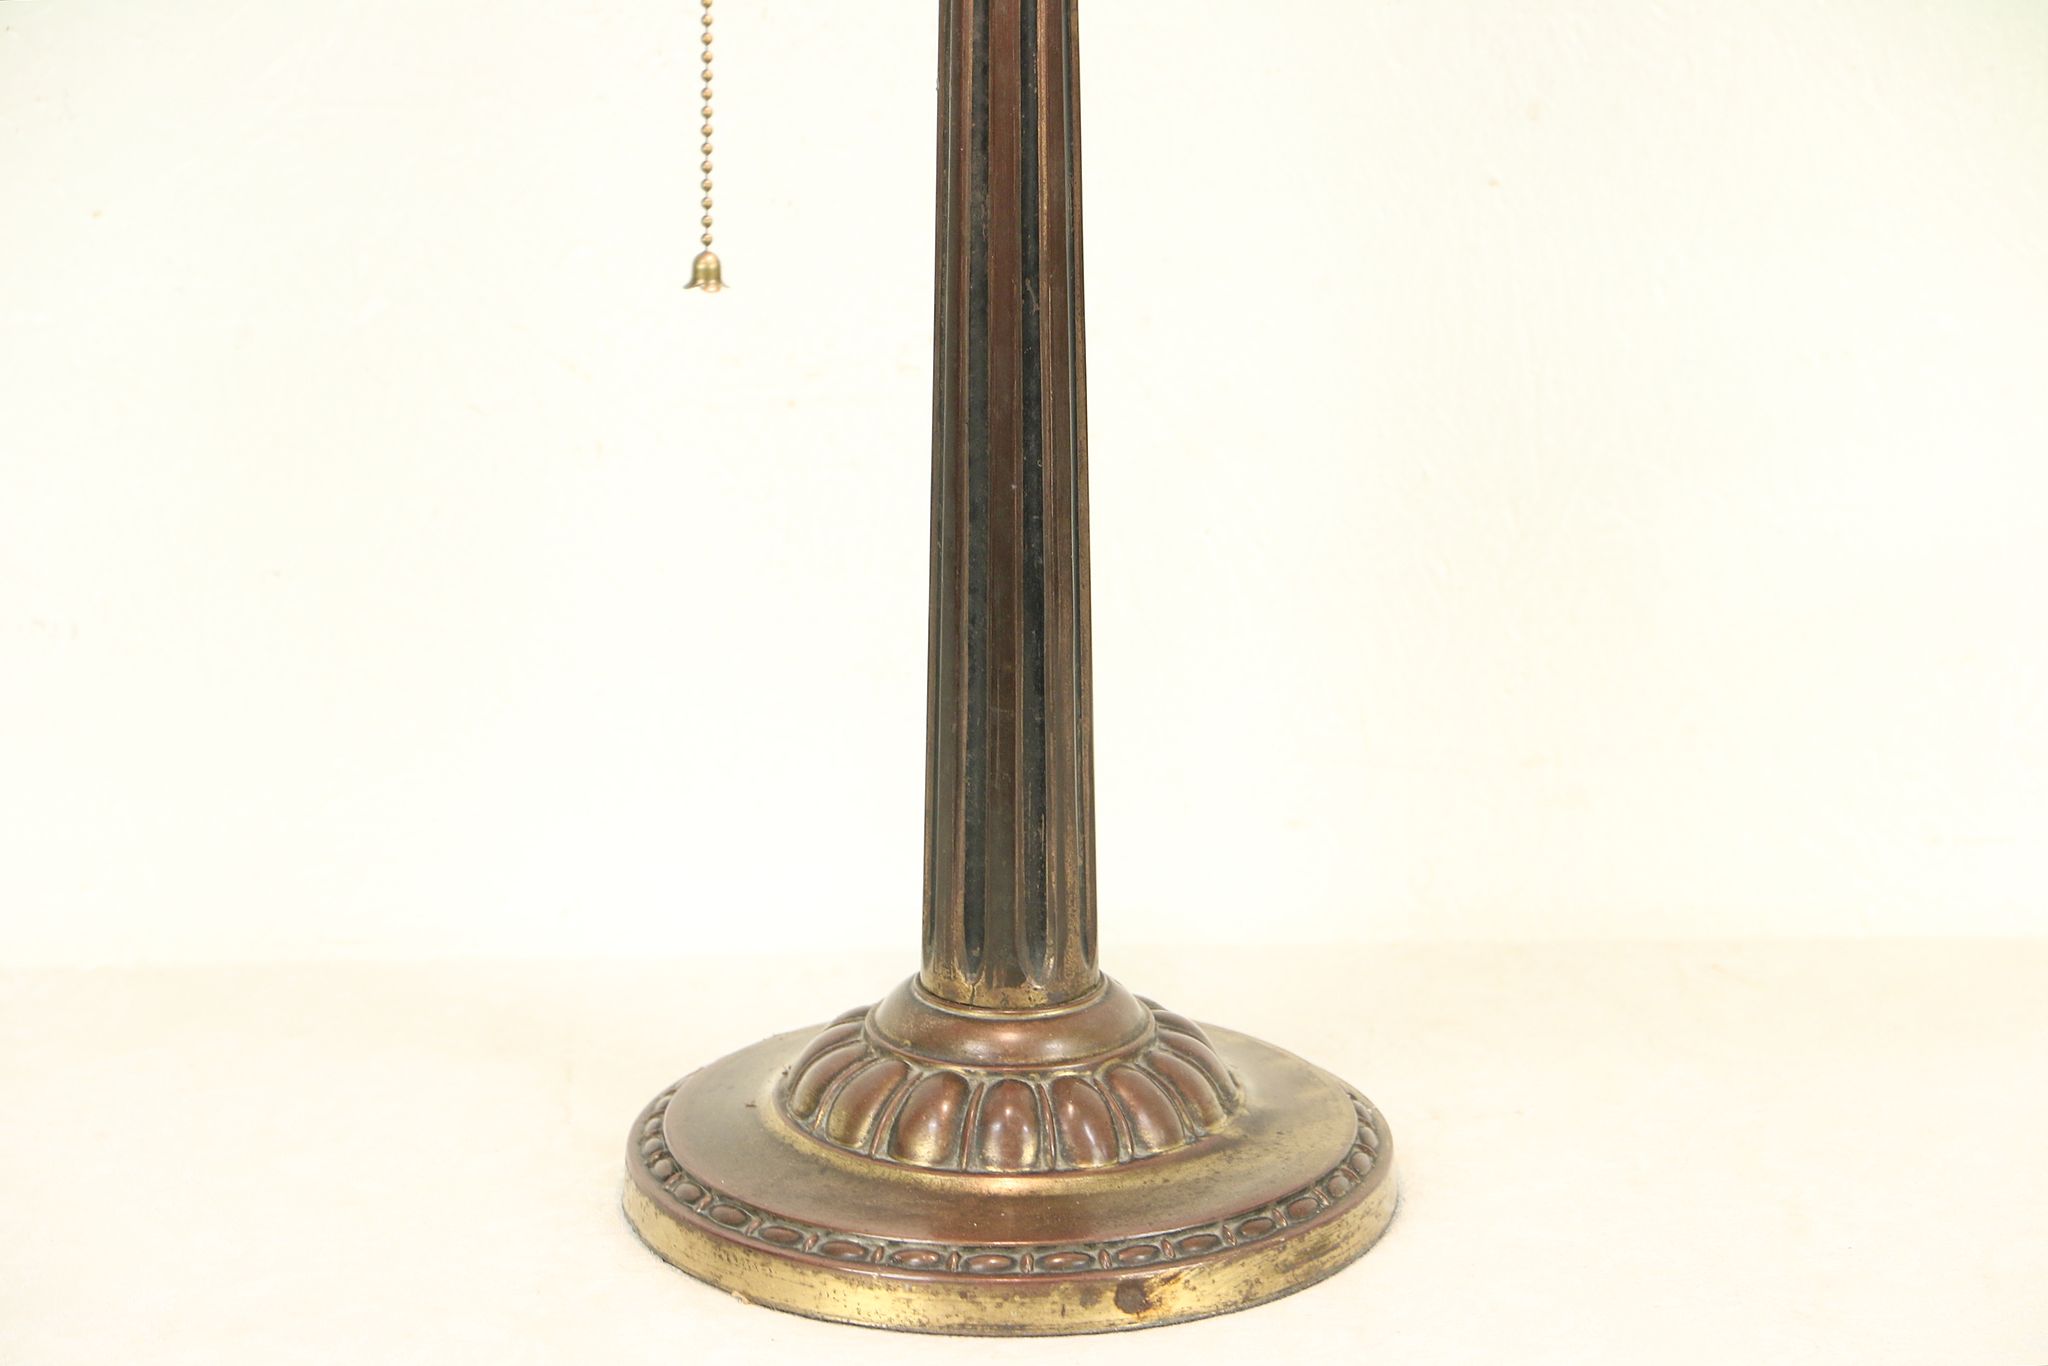 antique green desk lamp